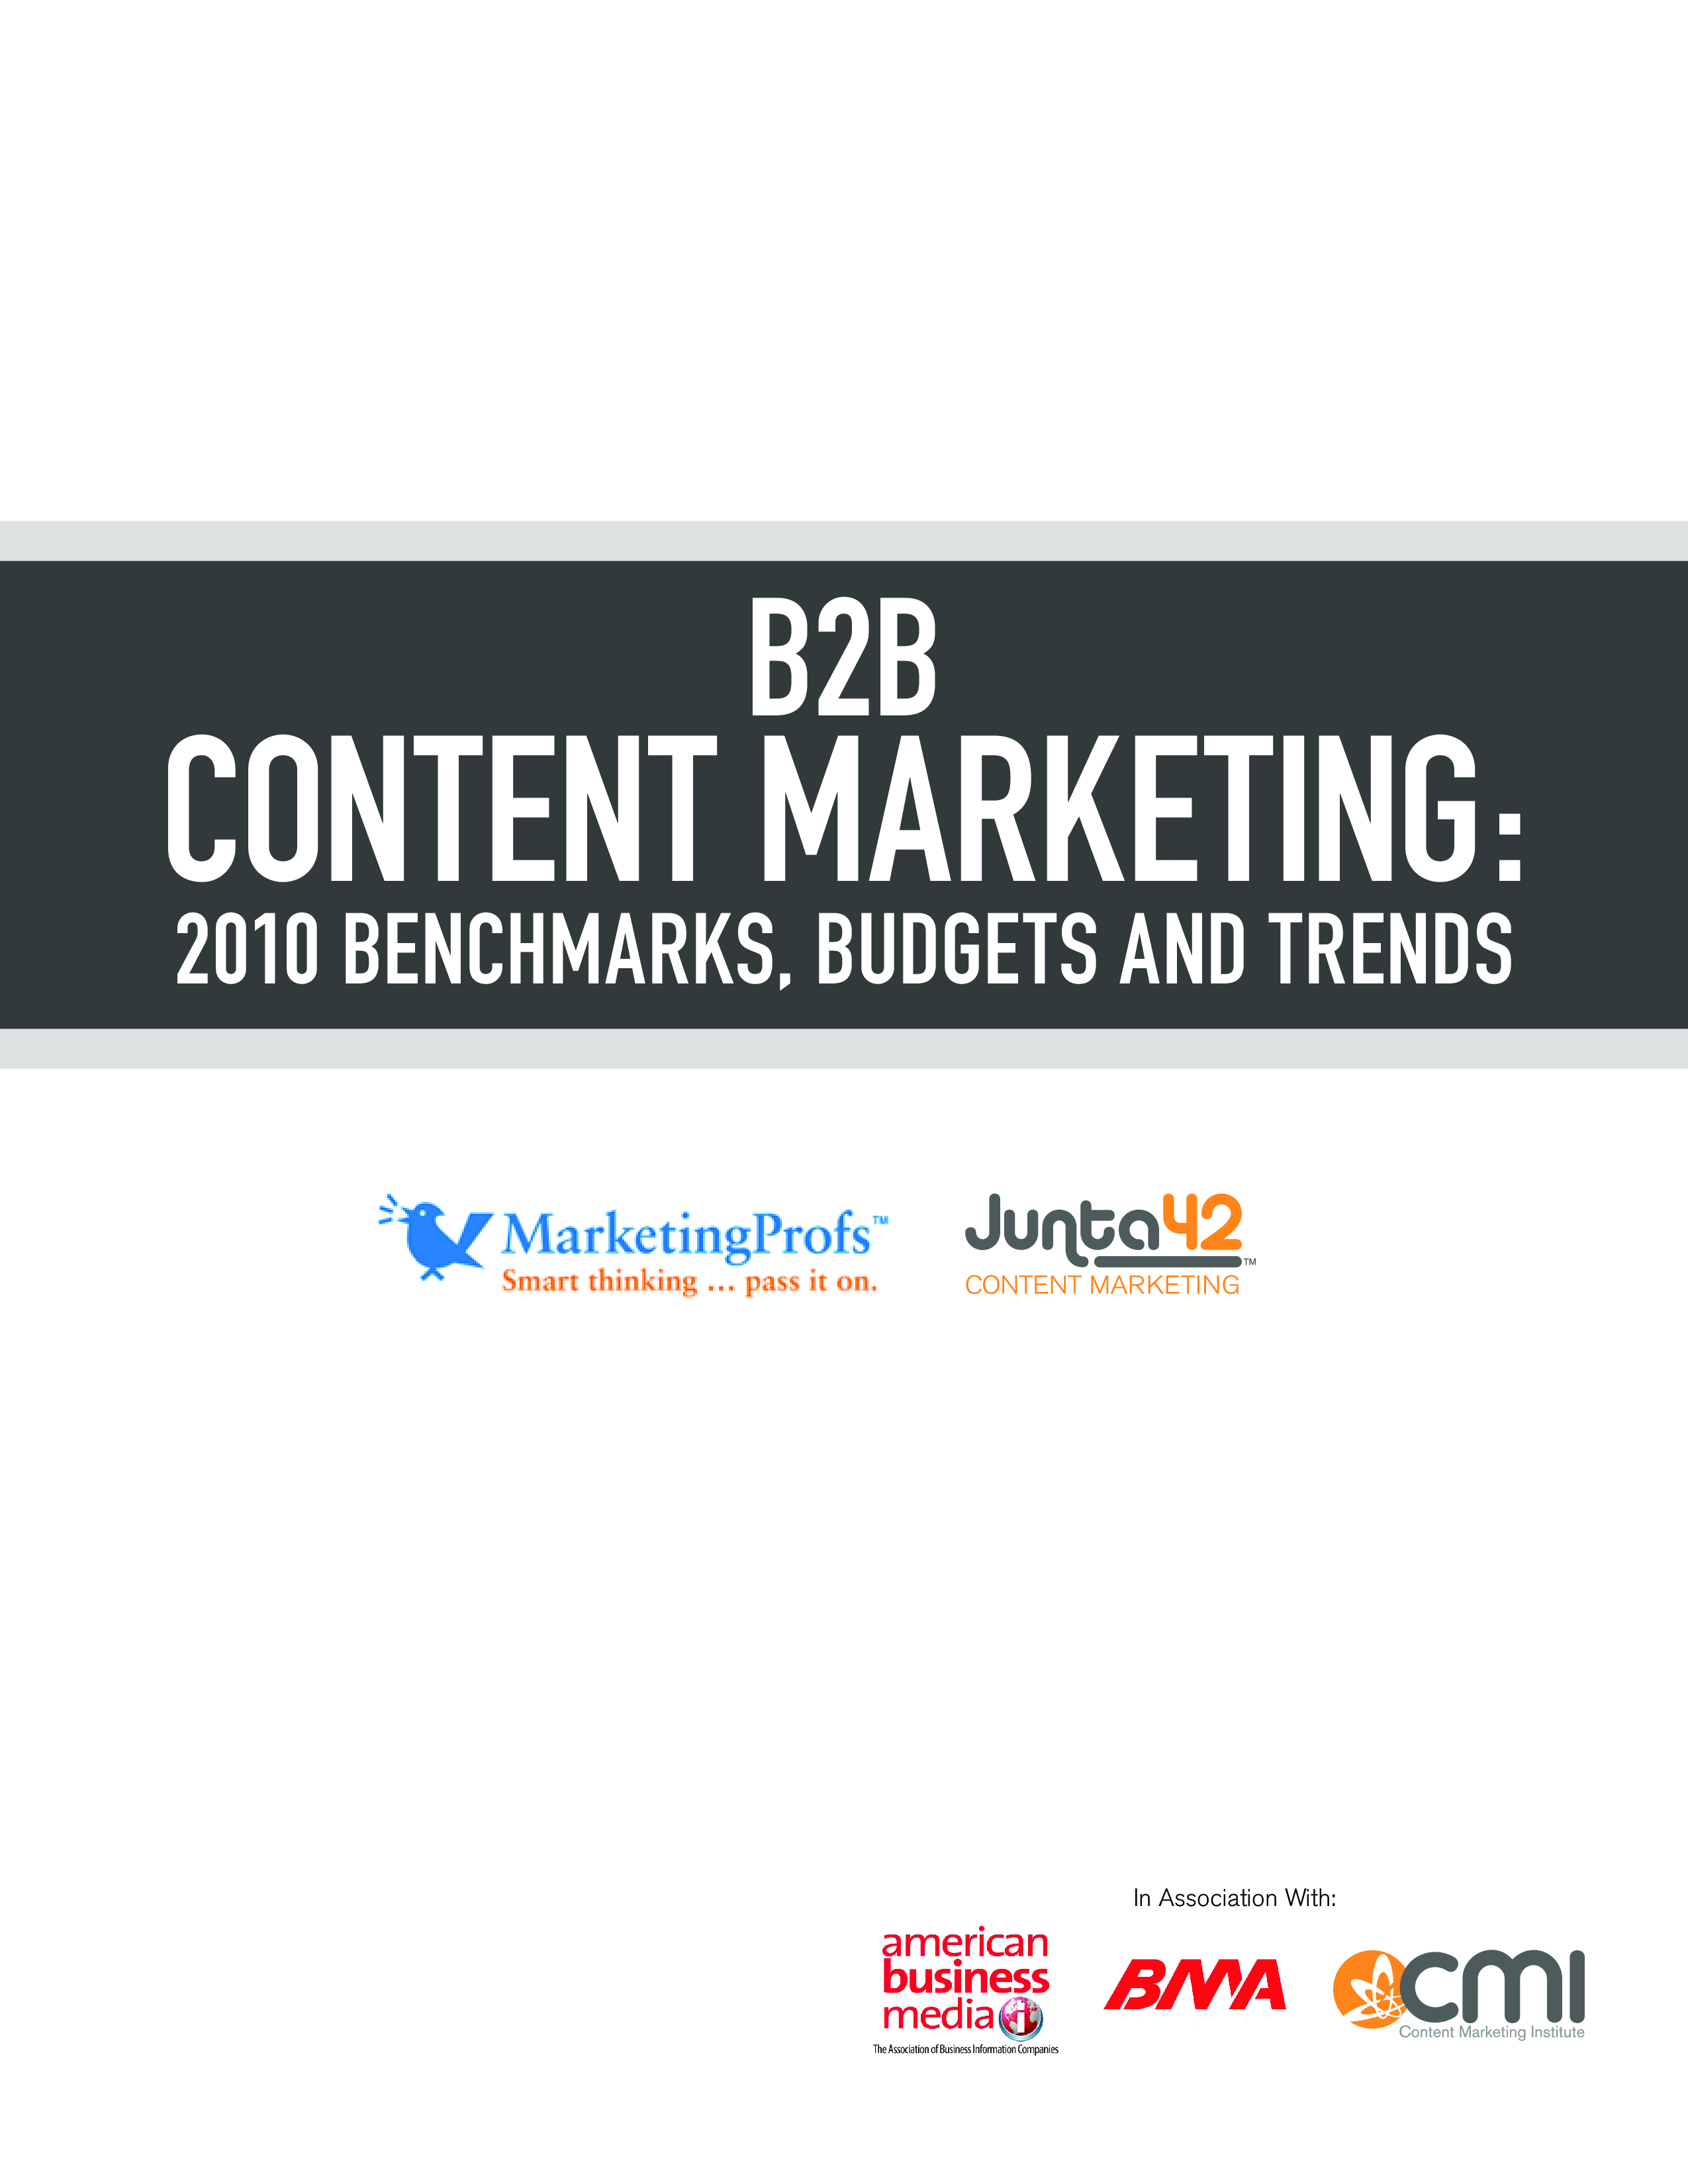 B2b Content Marketing main image